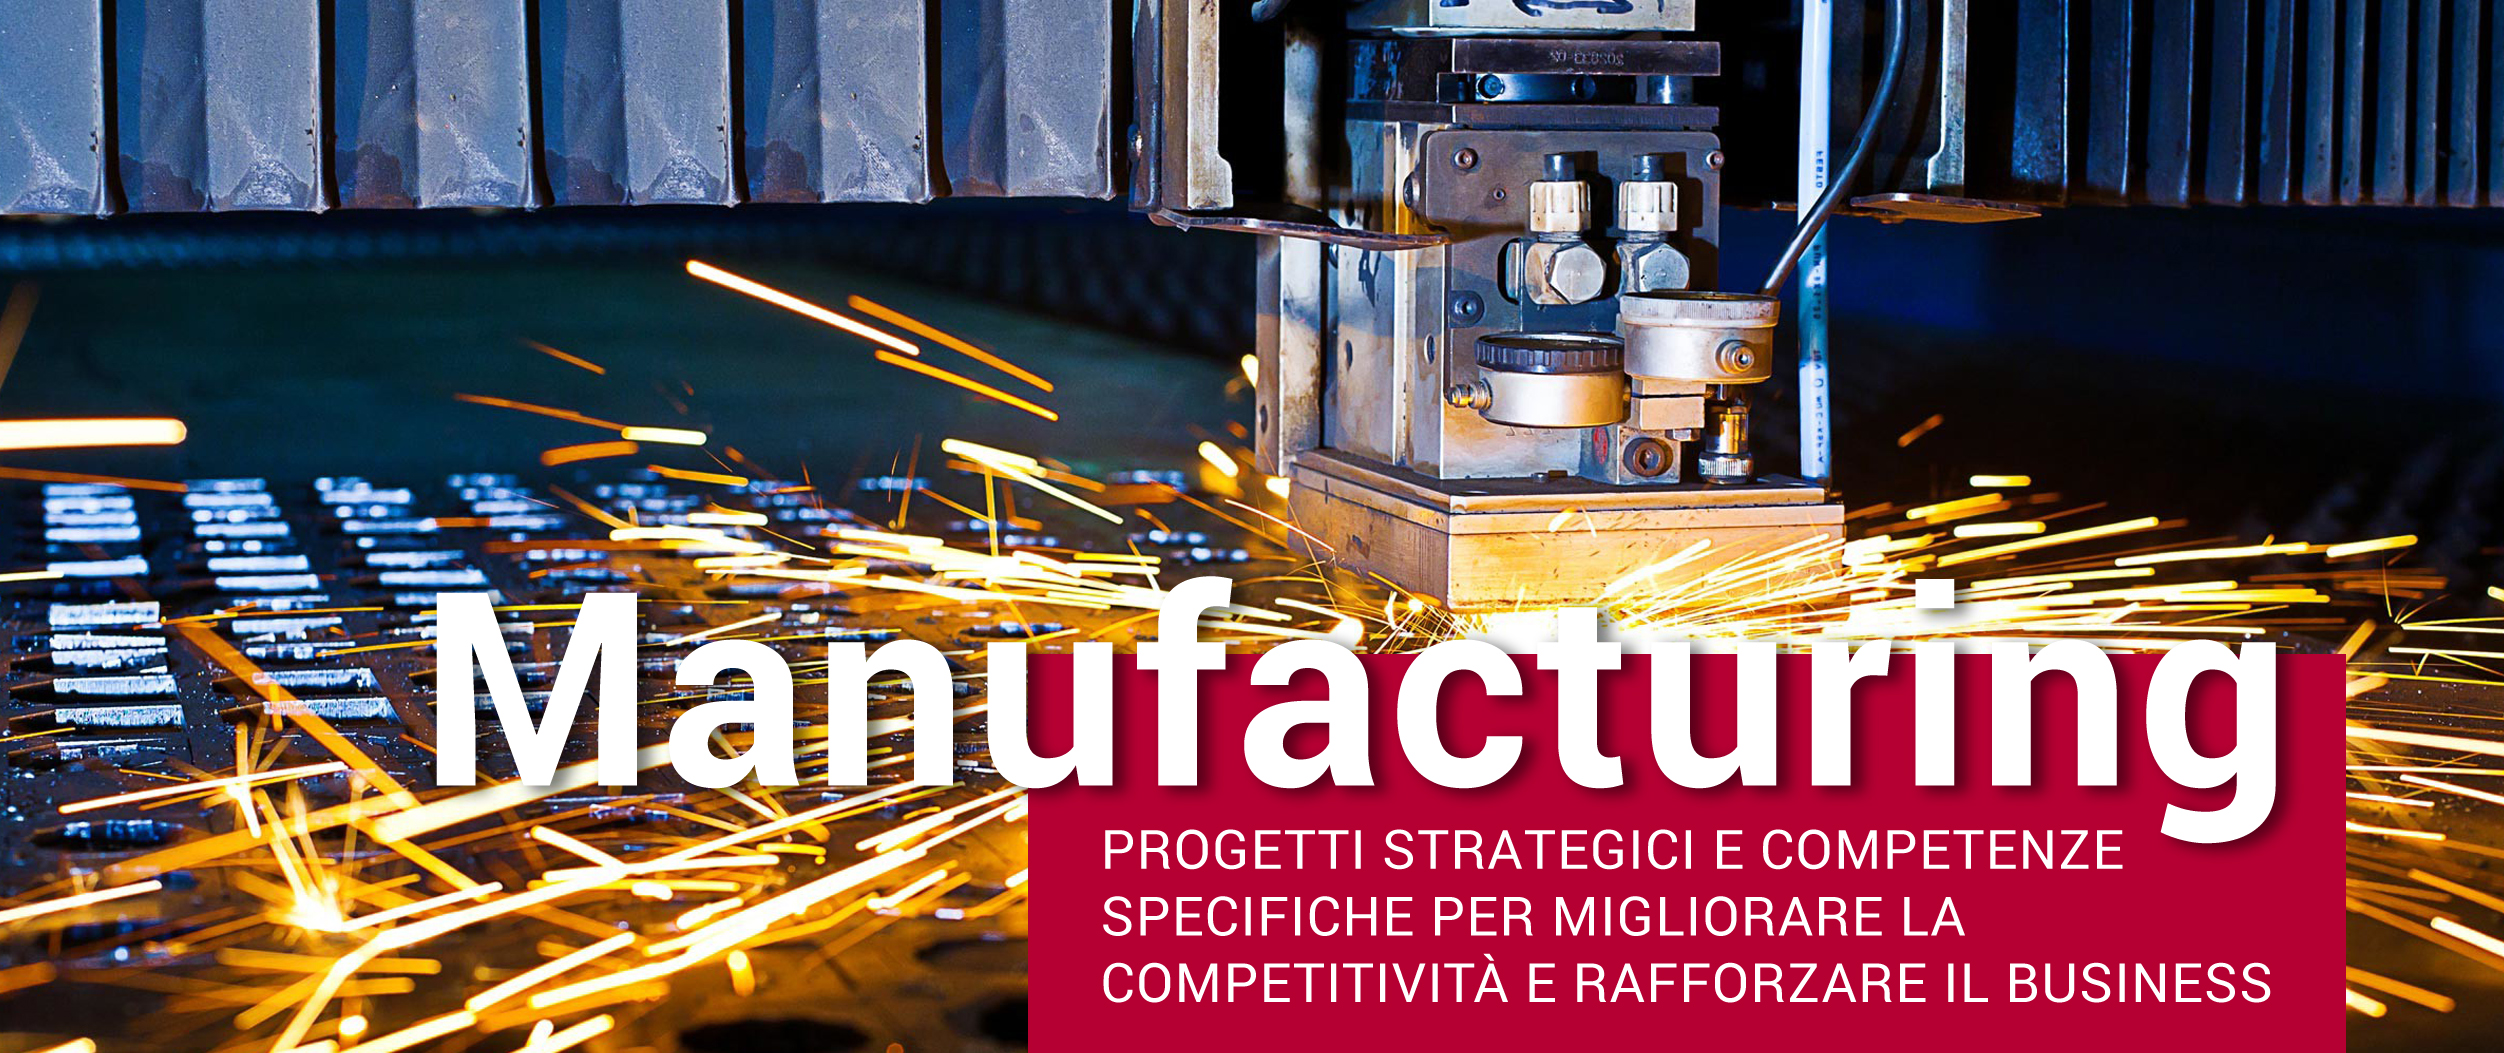 manufacturing-banner.jpg